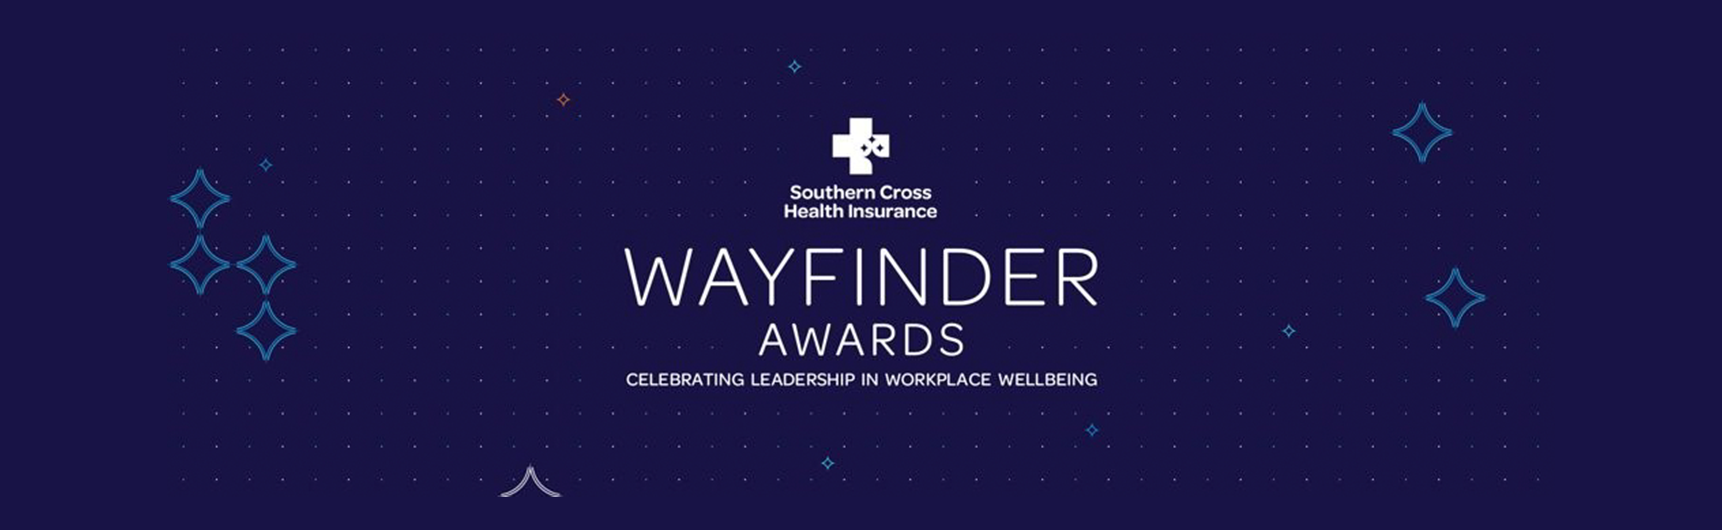 Wayfinder awards